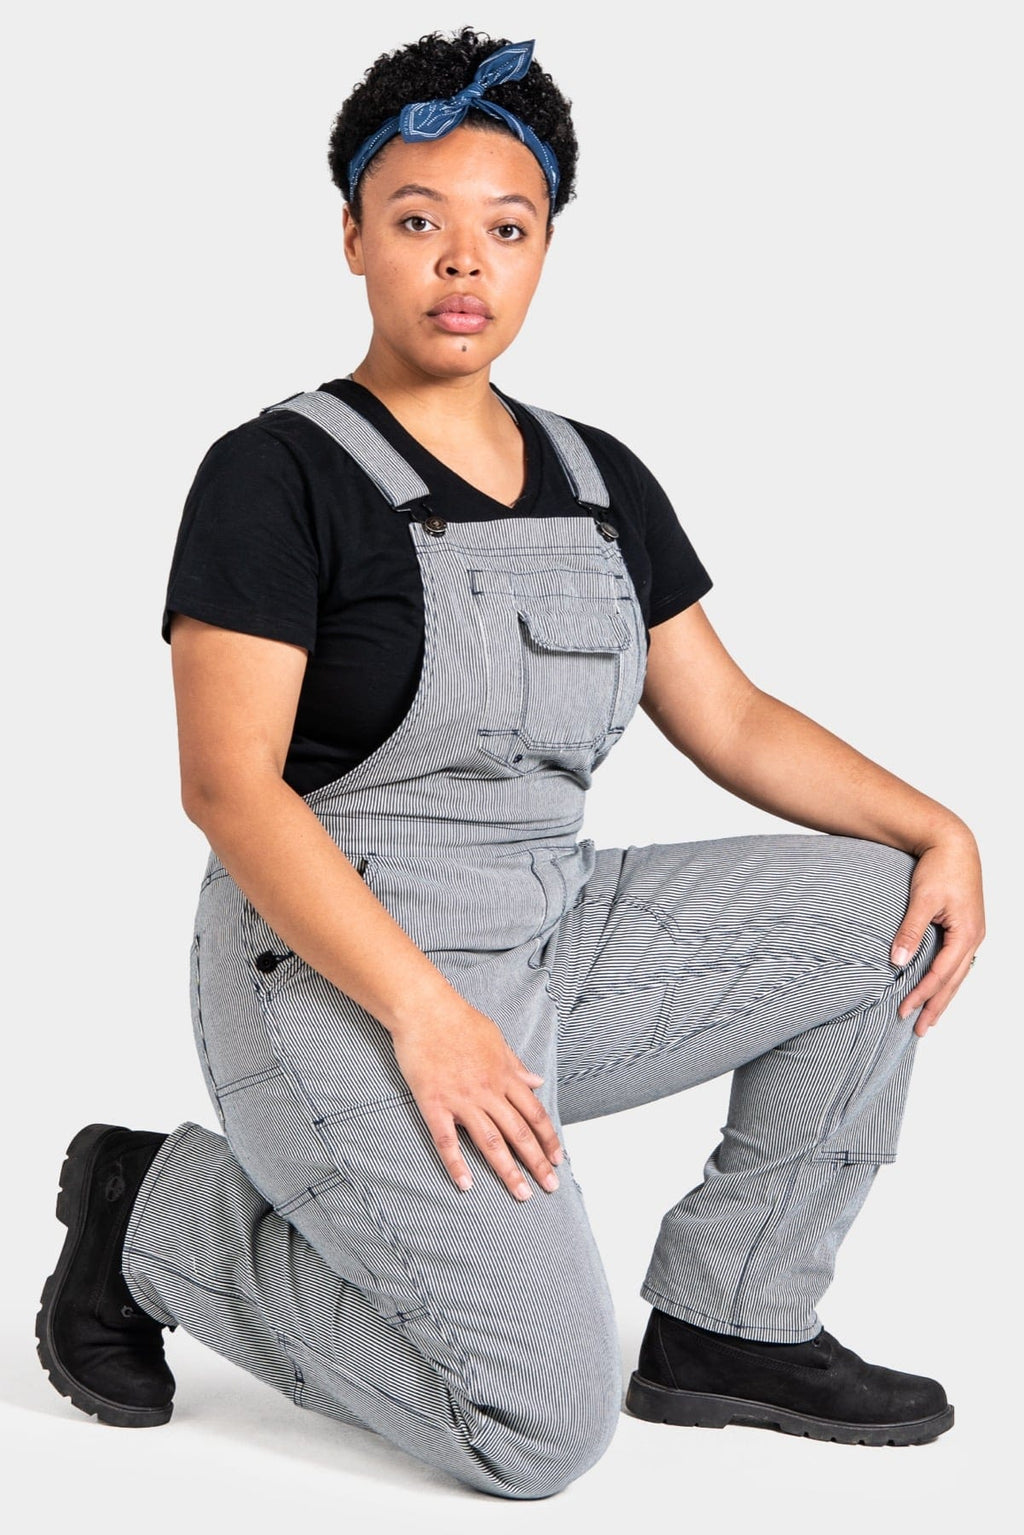 Freshley Overalls For Women in Indigo Stripe Denim Work Pants Dovetail Workwear